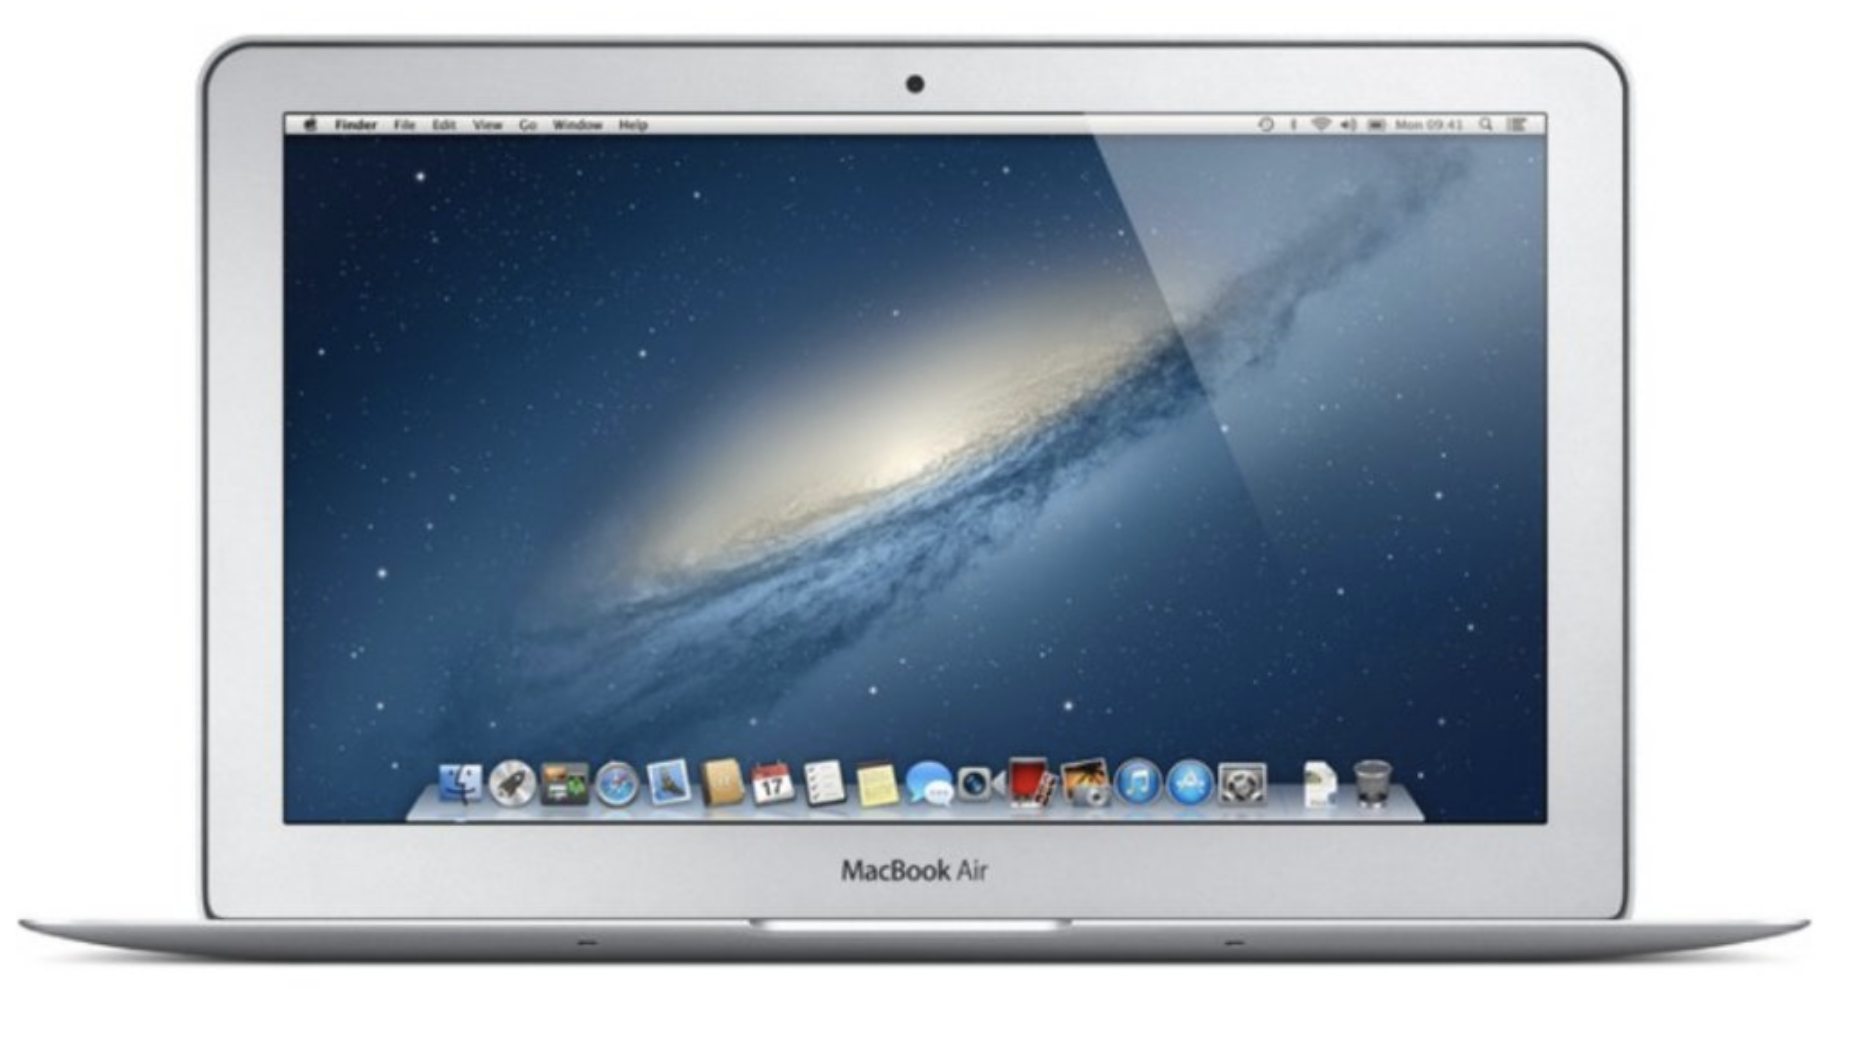 Apple MacBook Air 11 i5 4 GB 128 GB 2013